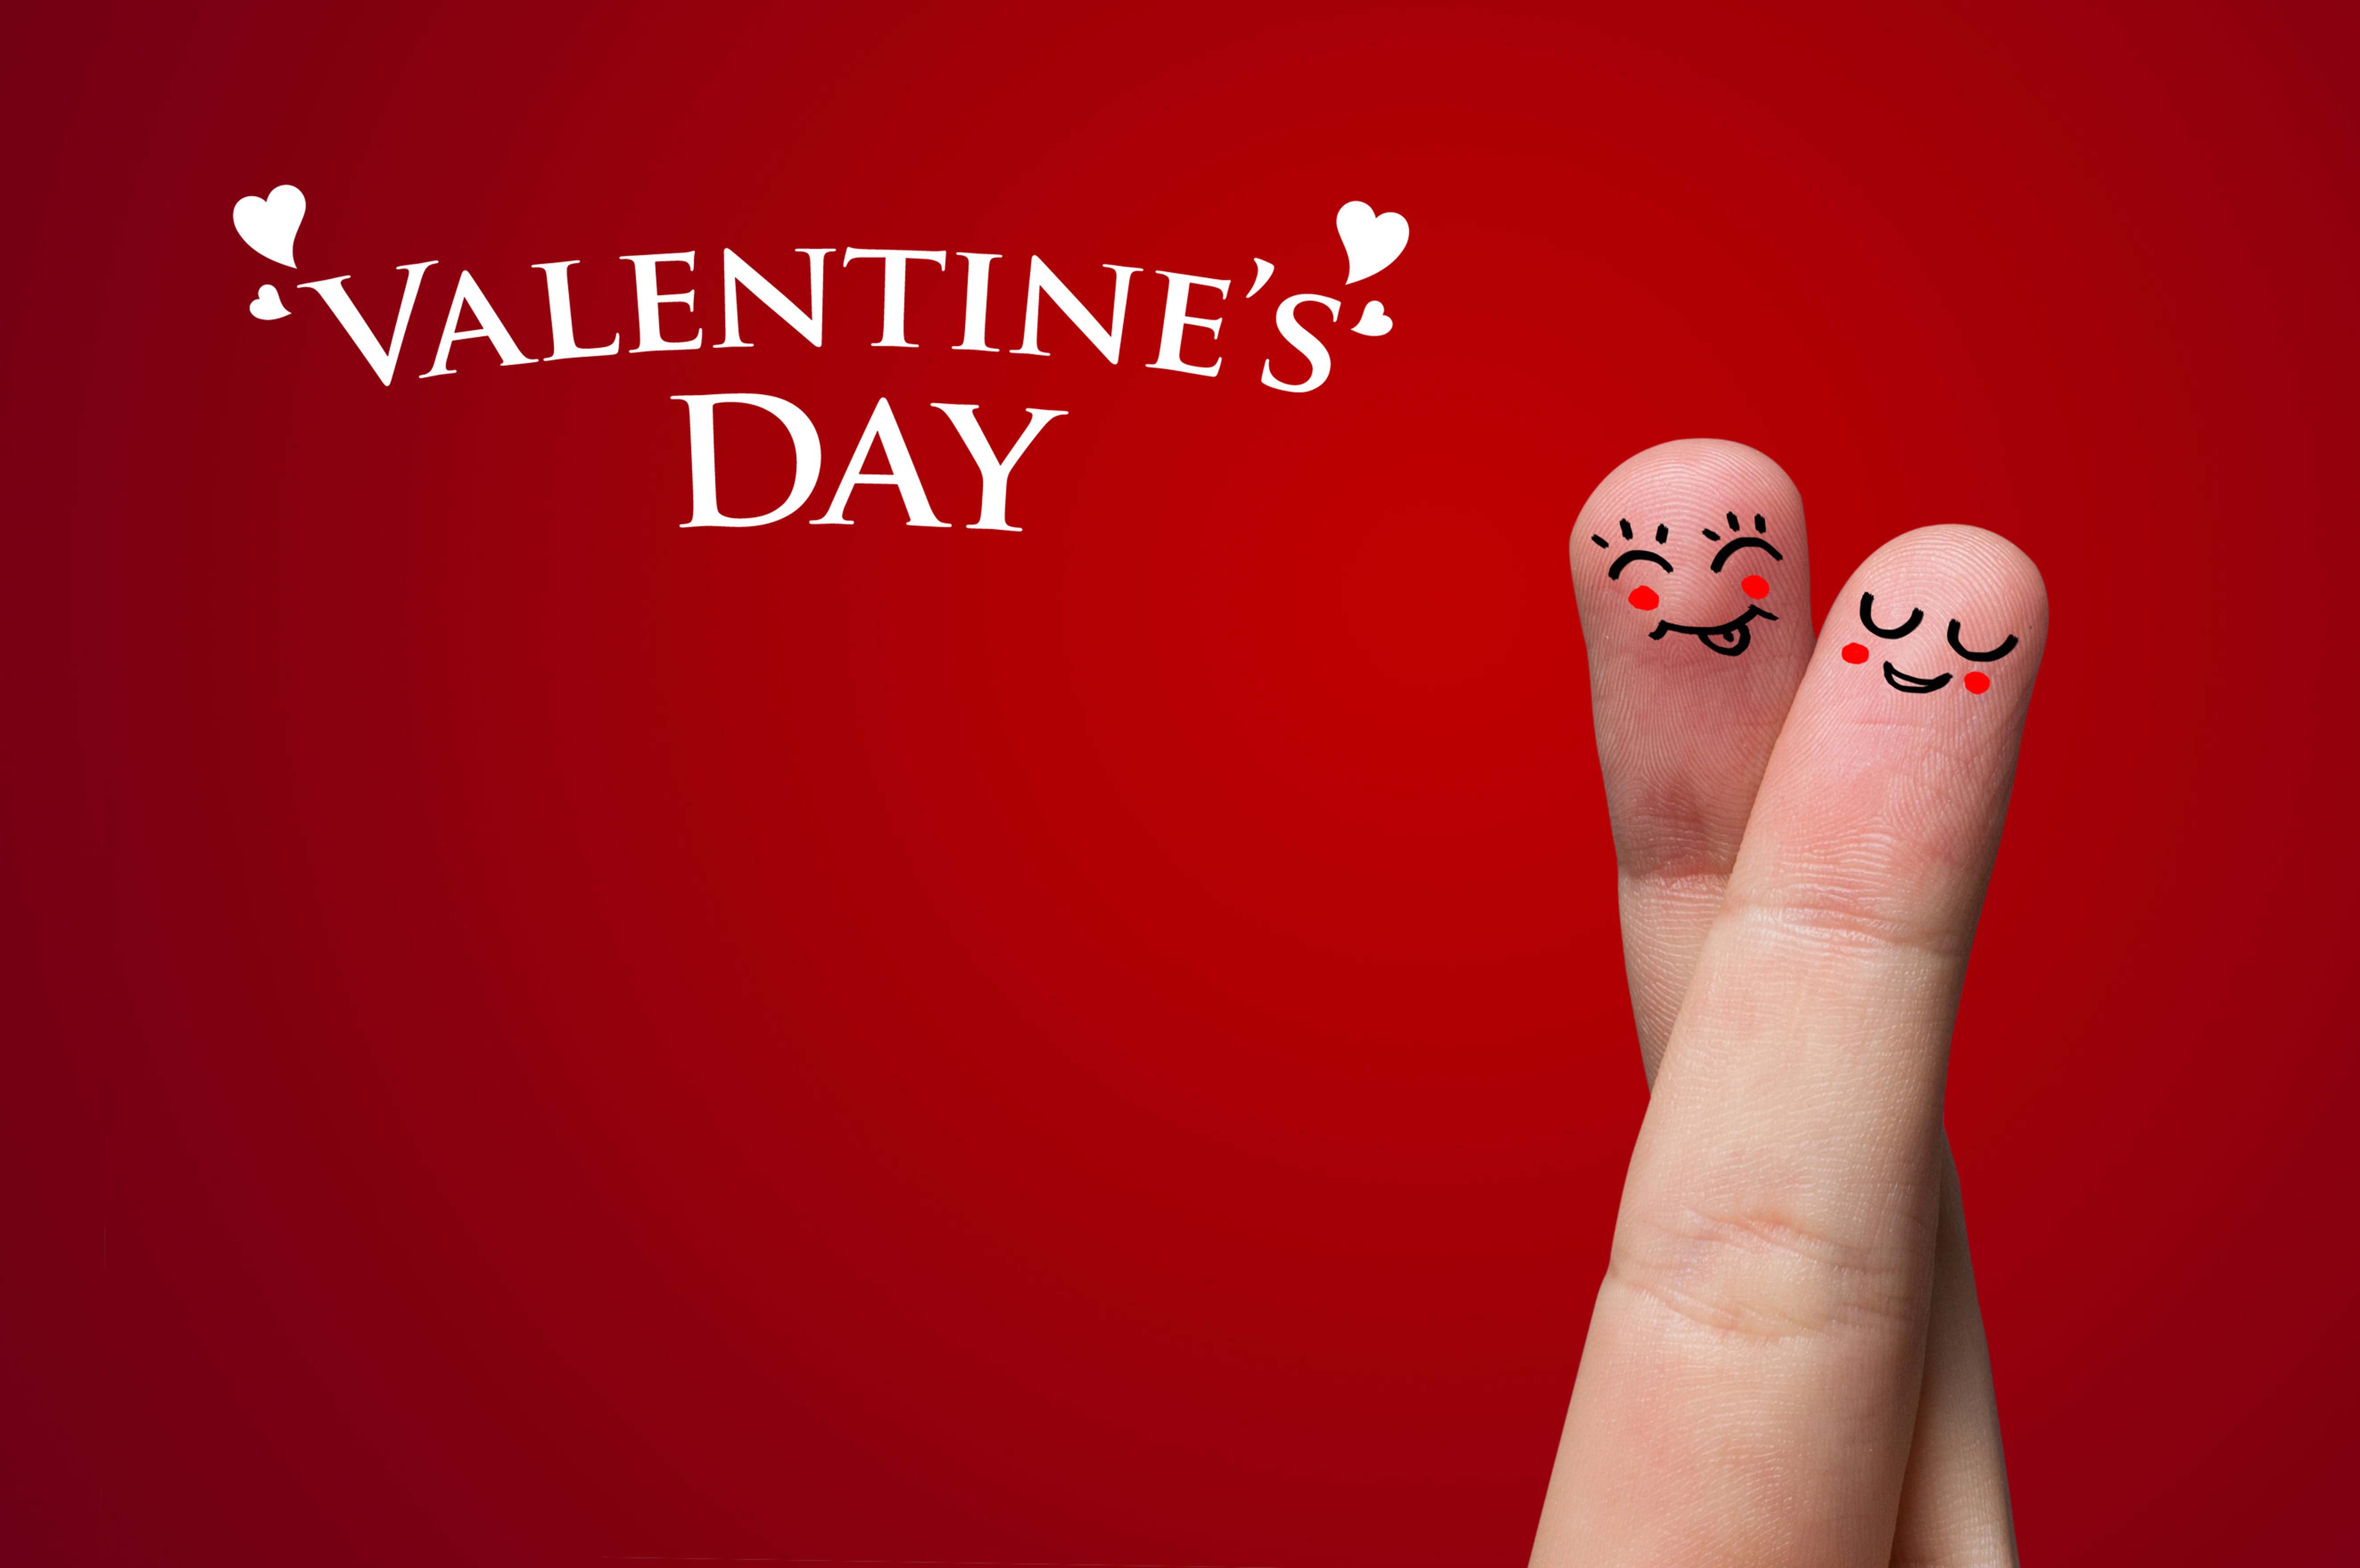 10 Top Funny Weird Valentines Day Card Ideas - TipTopTens.com